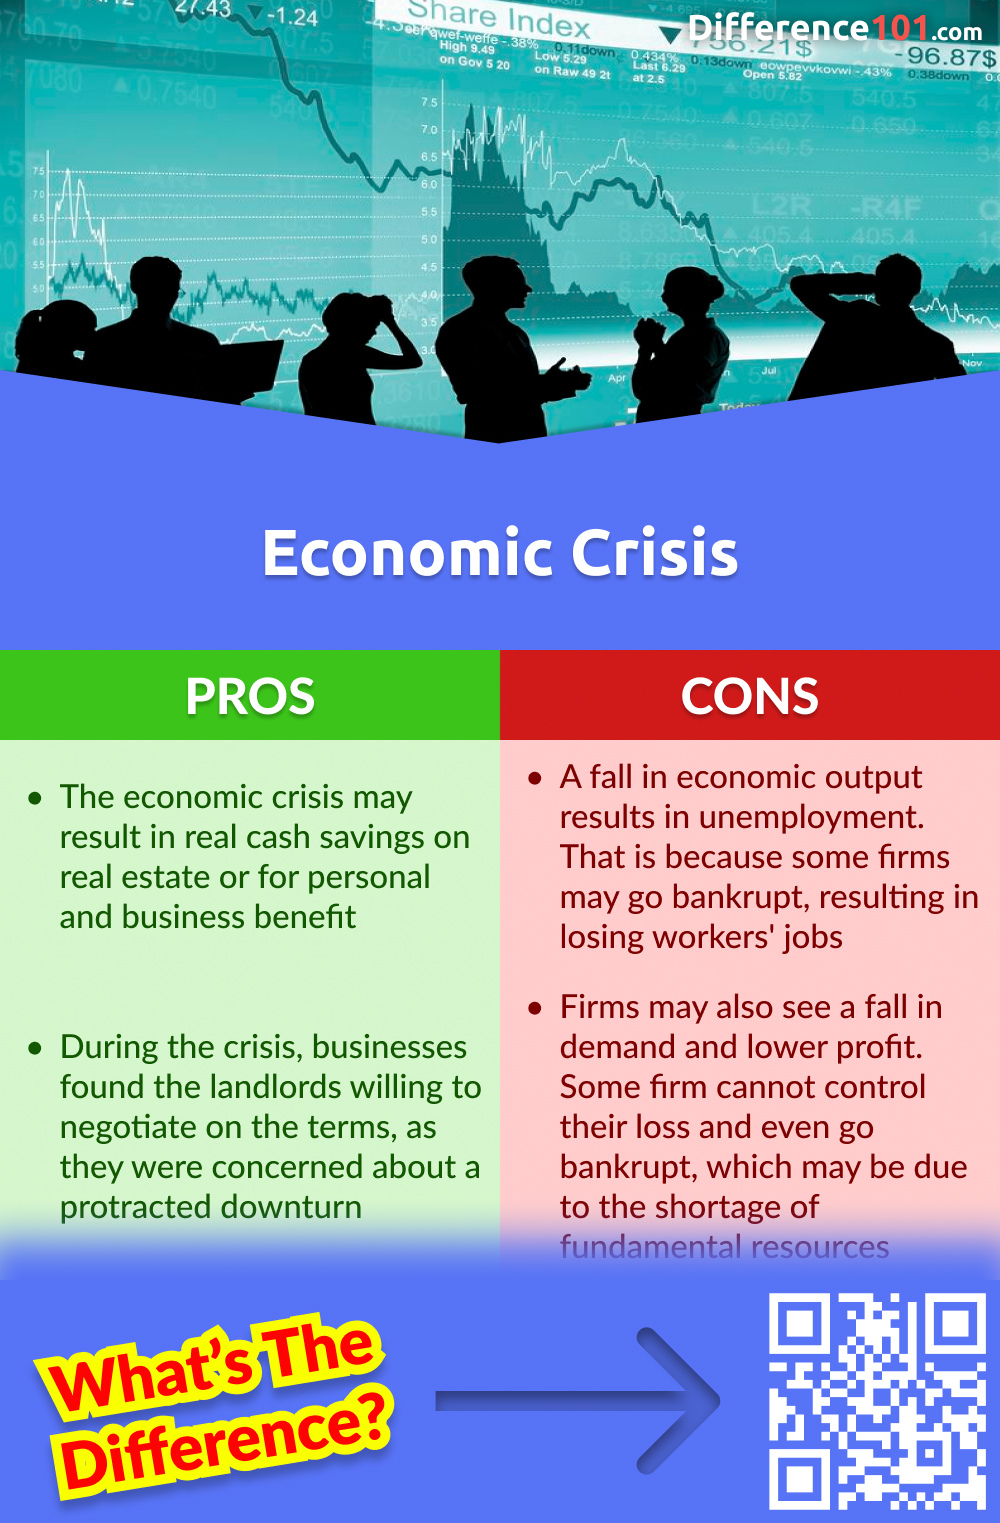 Economic Crisis Pros and Cons